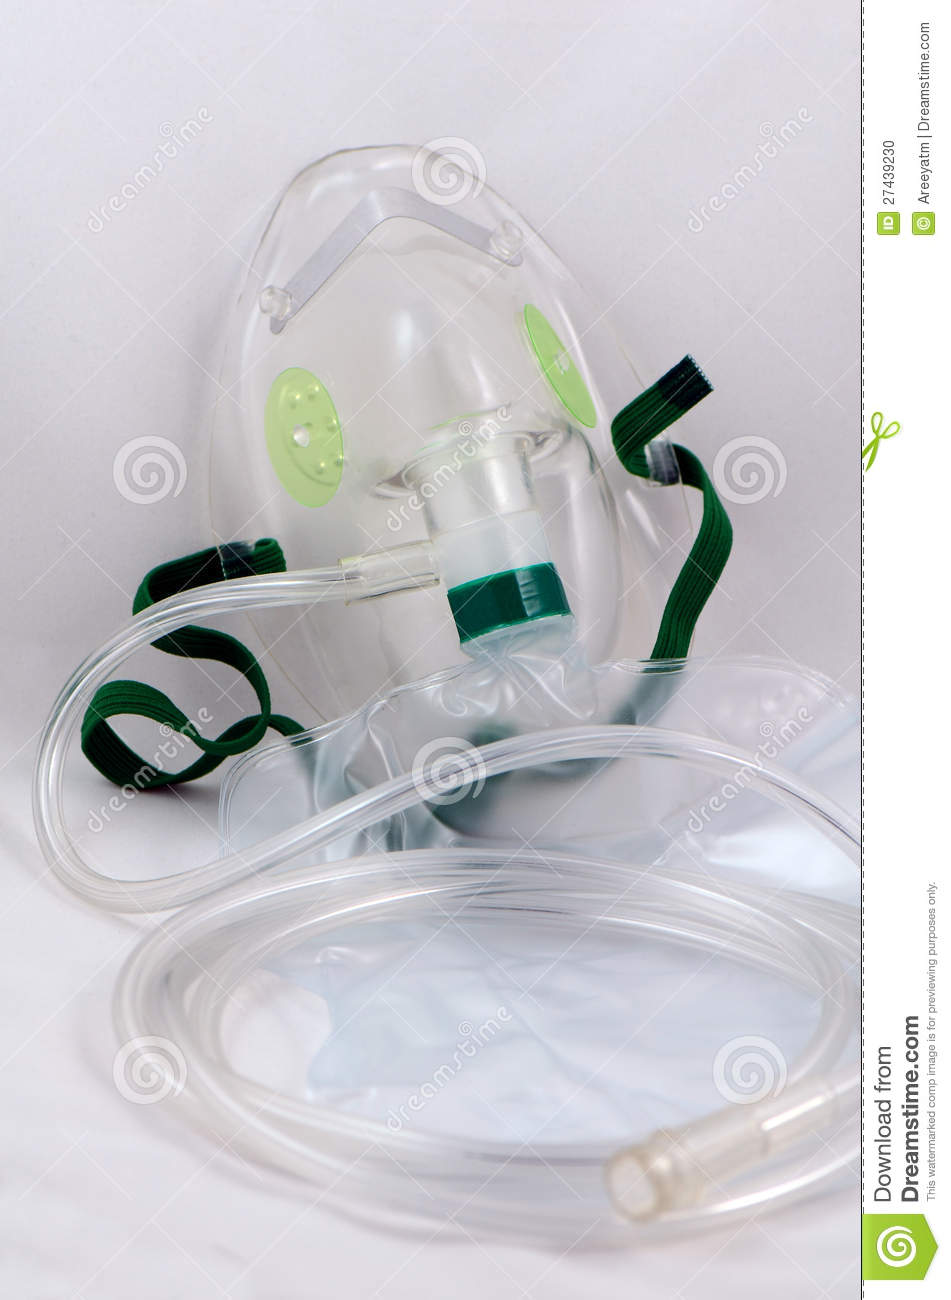 Oxygen Mask With Bag  Stock Photo   Image  27439230